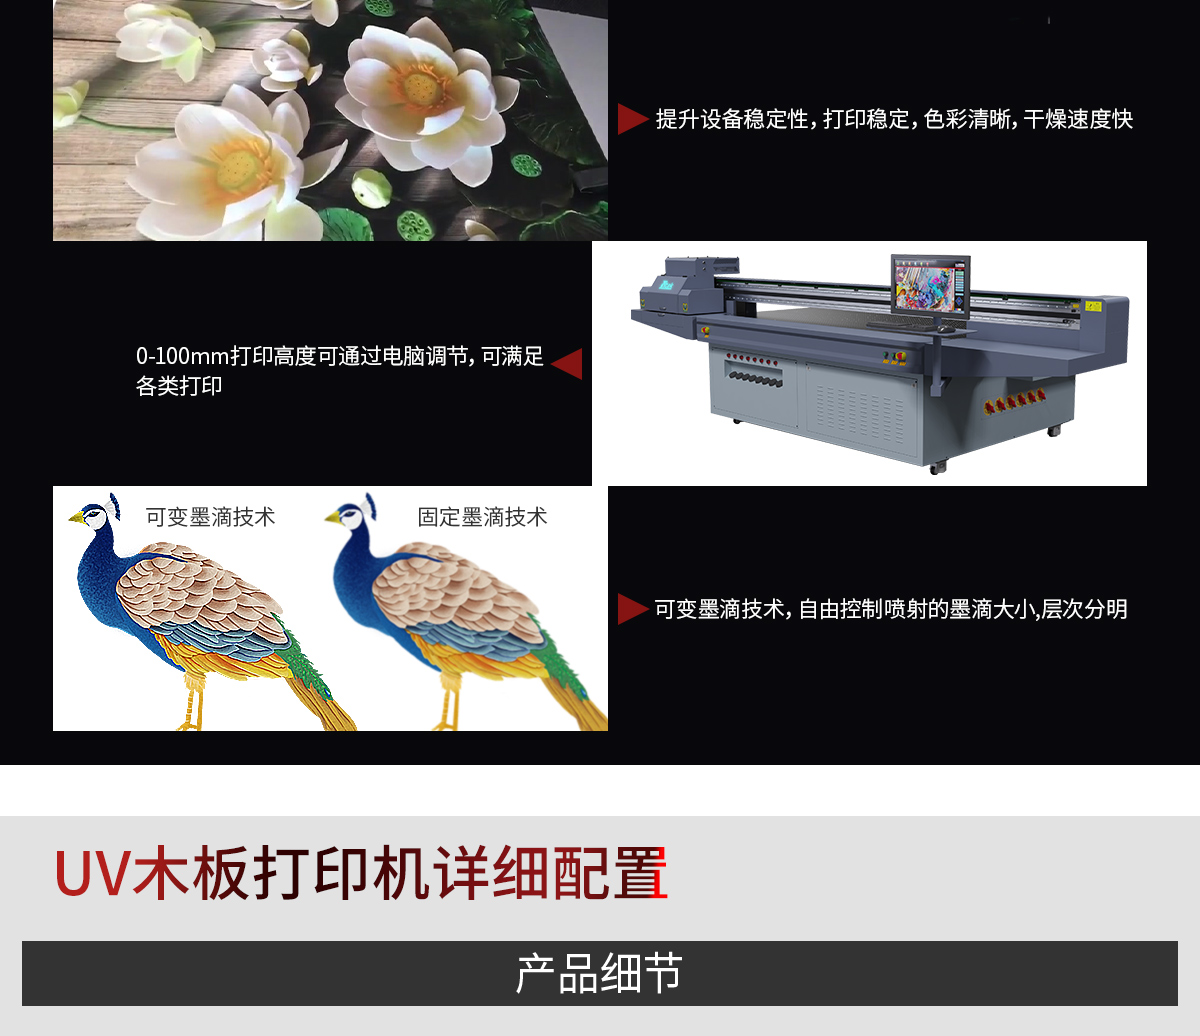 Engel Water dispenser panel printing equipment Induction cooking panel printing machine metal panel uv printer